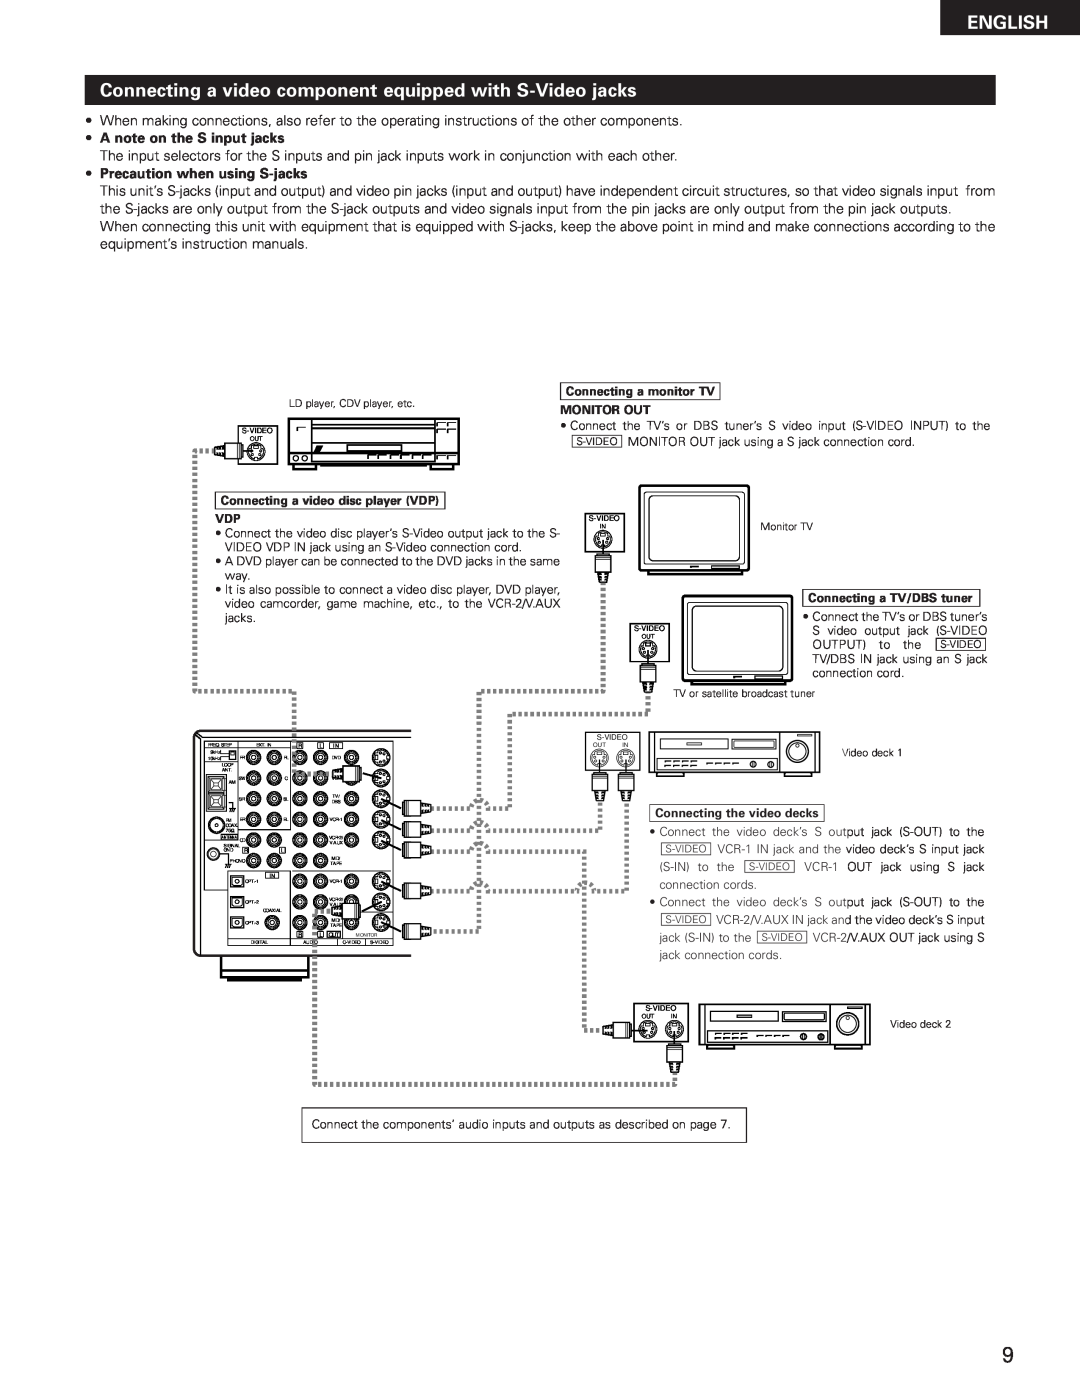 Denon AVR-3300 manual English, A note on the S input jacks, Precaution when using S-jacks 